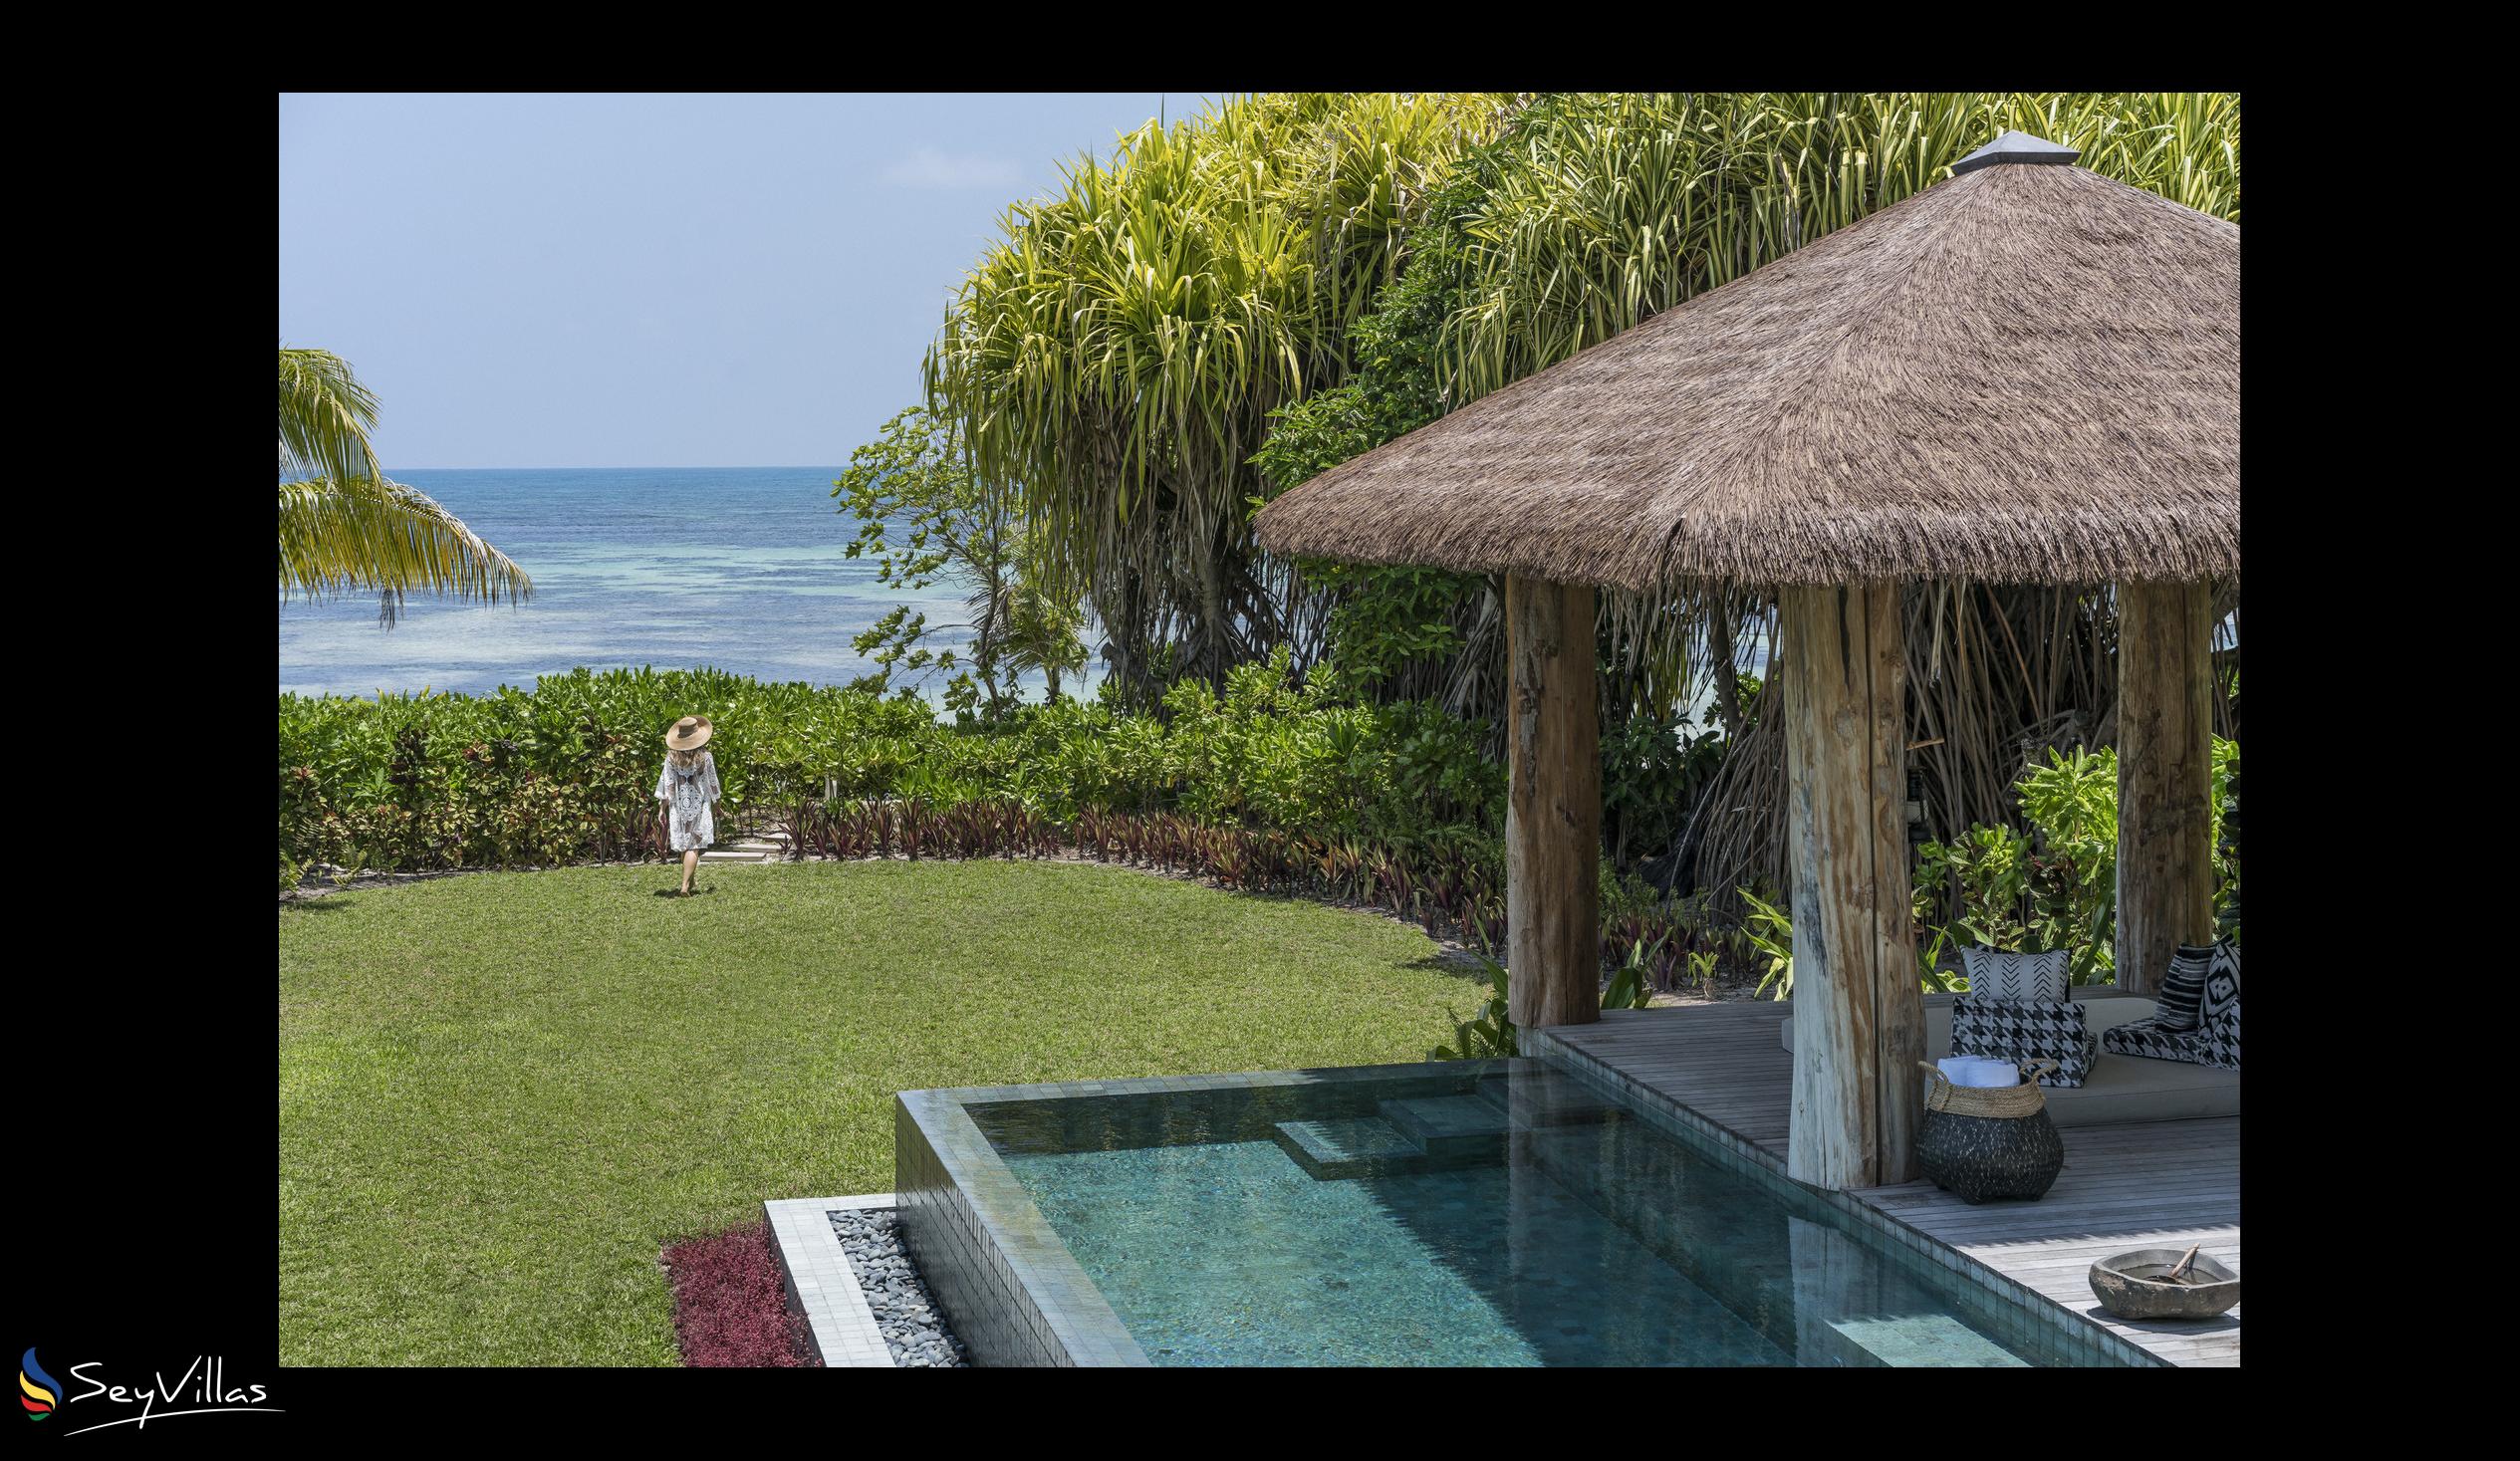 Foto 54: Four Seasons Resort Desroches Island - Sunset View Pool Villa - Desroches Island (Seychellen)